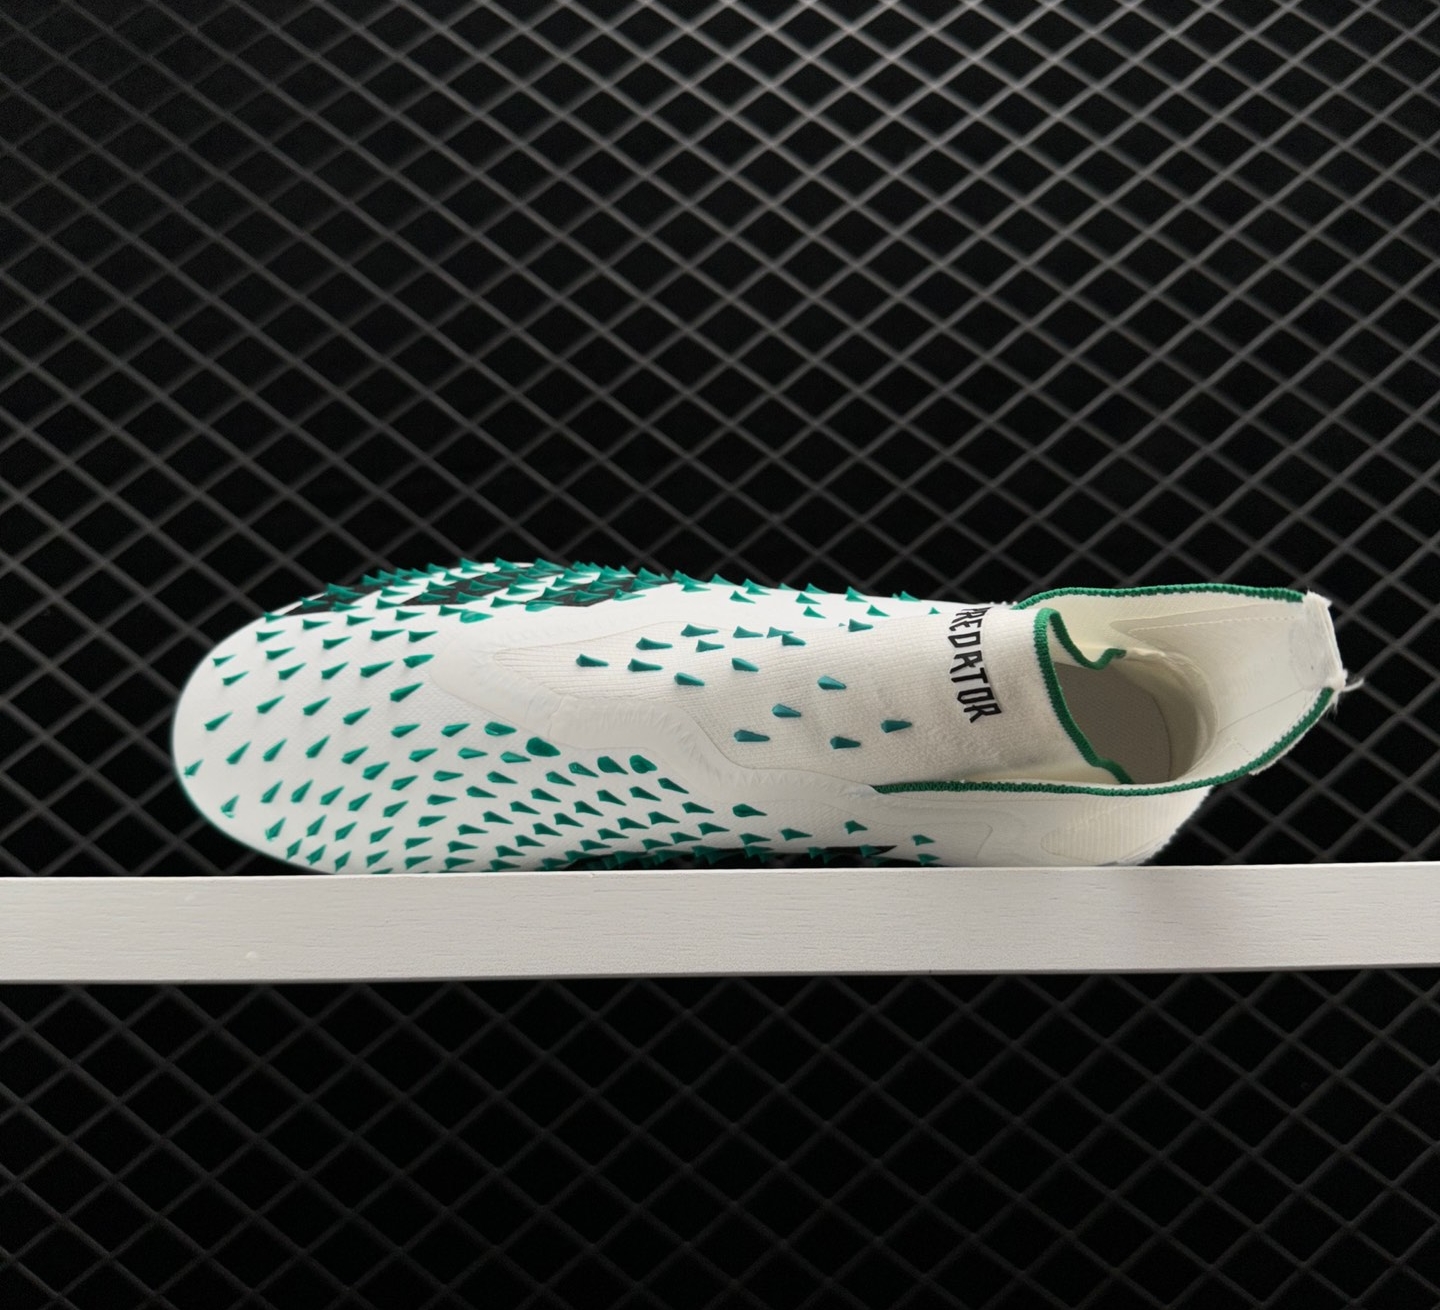 Adidas Predator Freak+ EQT FG 'Demonskin - White Sub Green' GX0224 - Buy Now for Ultimate Performance!